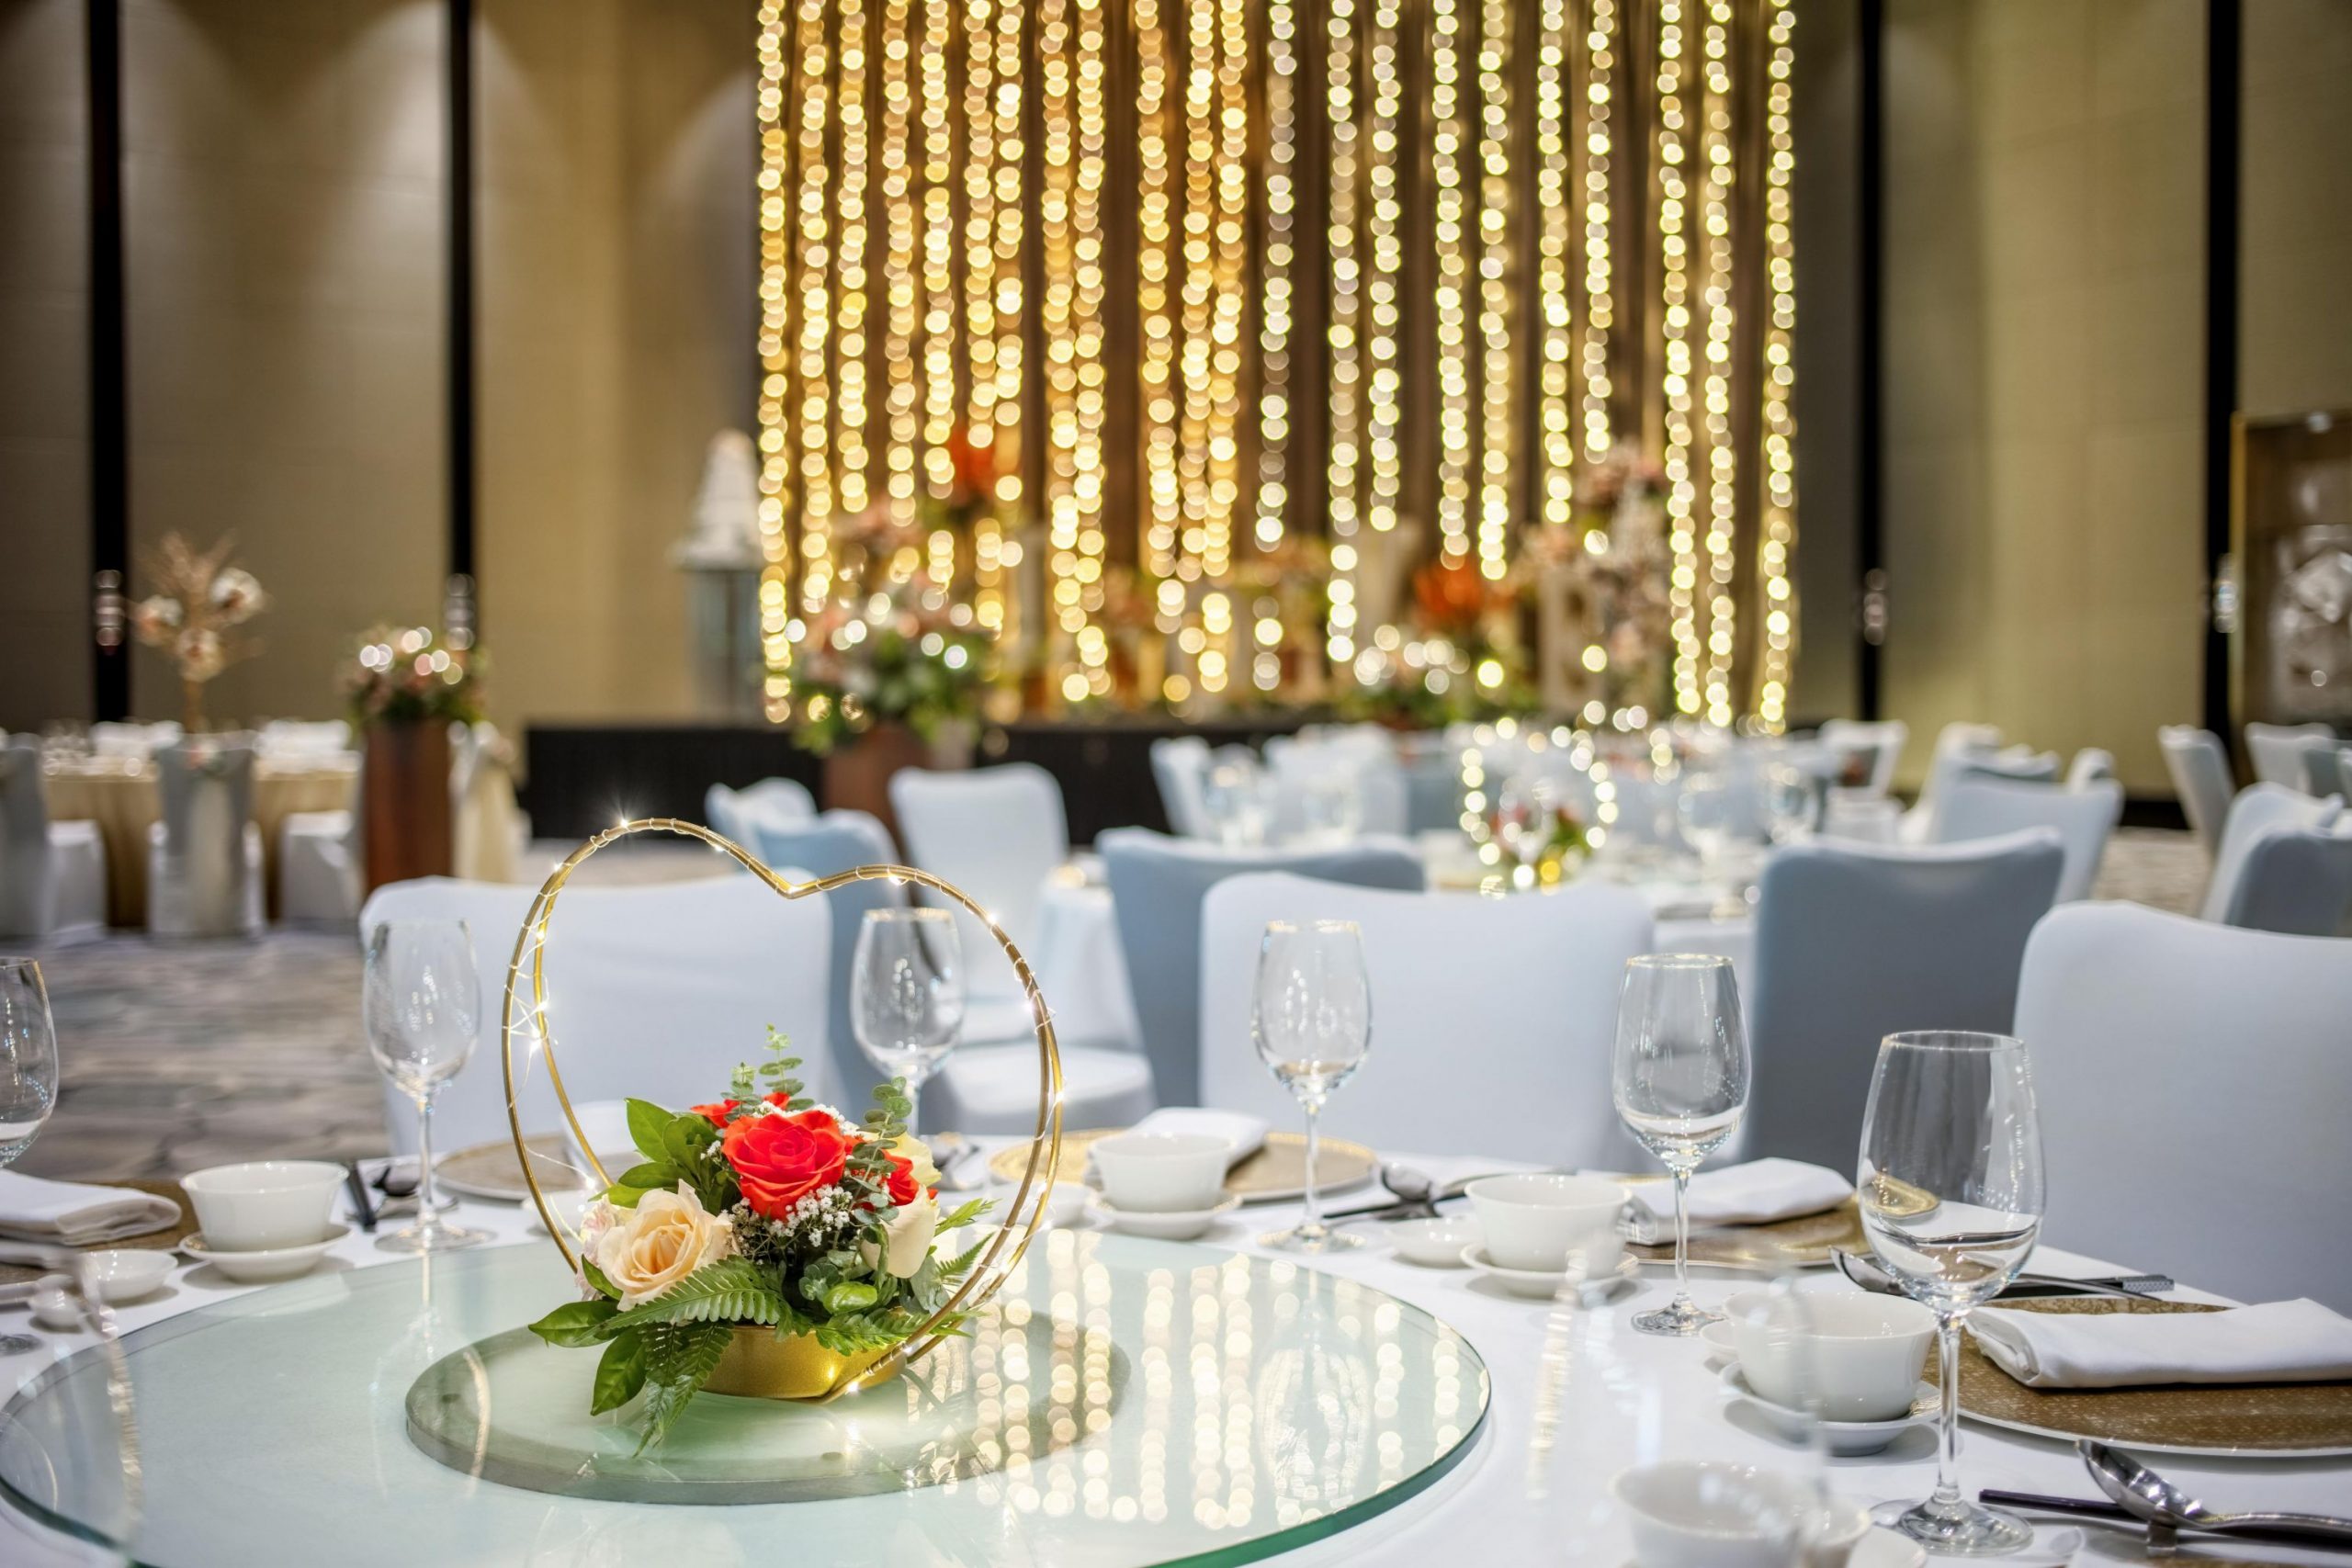 Wedding Banquet at Fairmont Ballroom, Raffles City Convention Centre